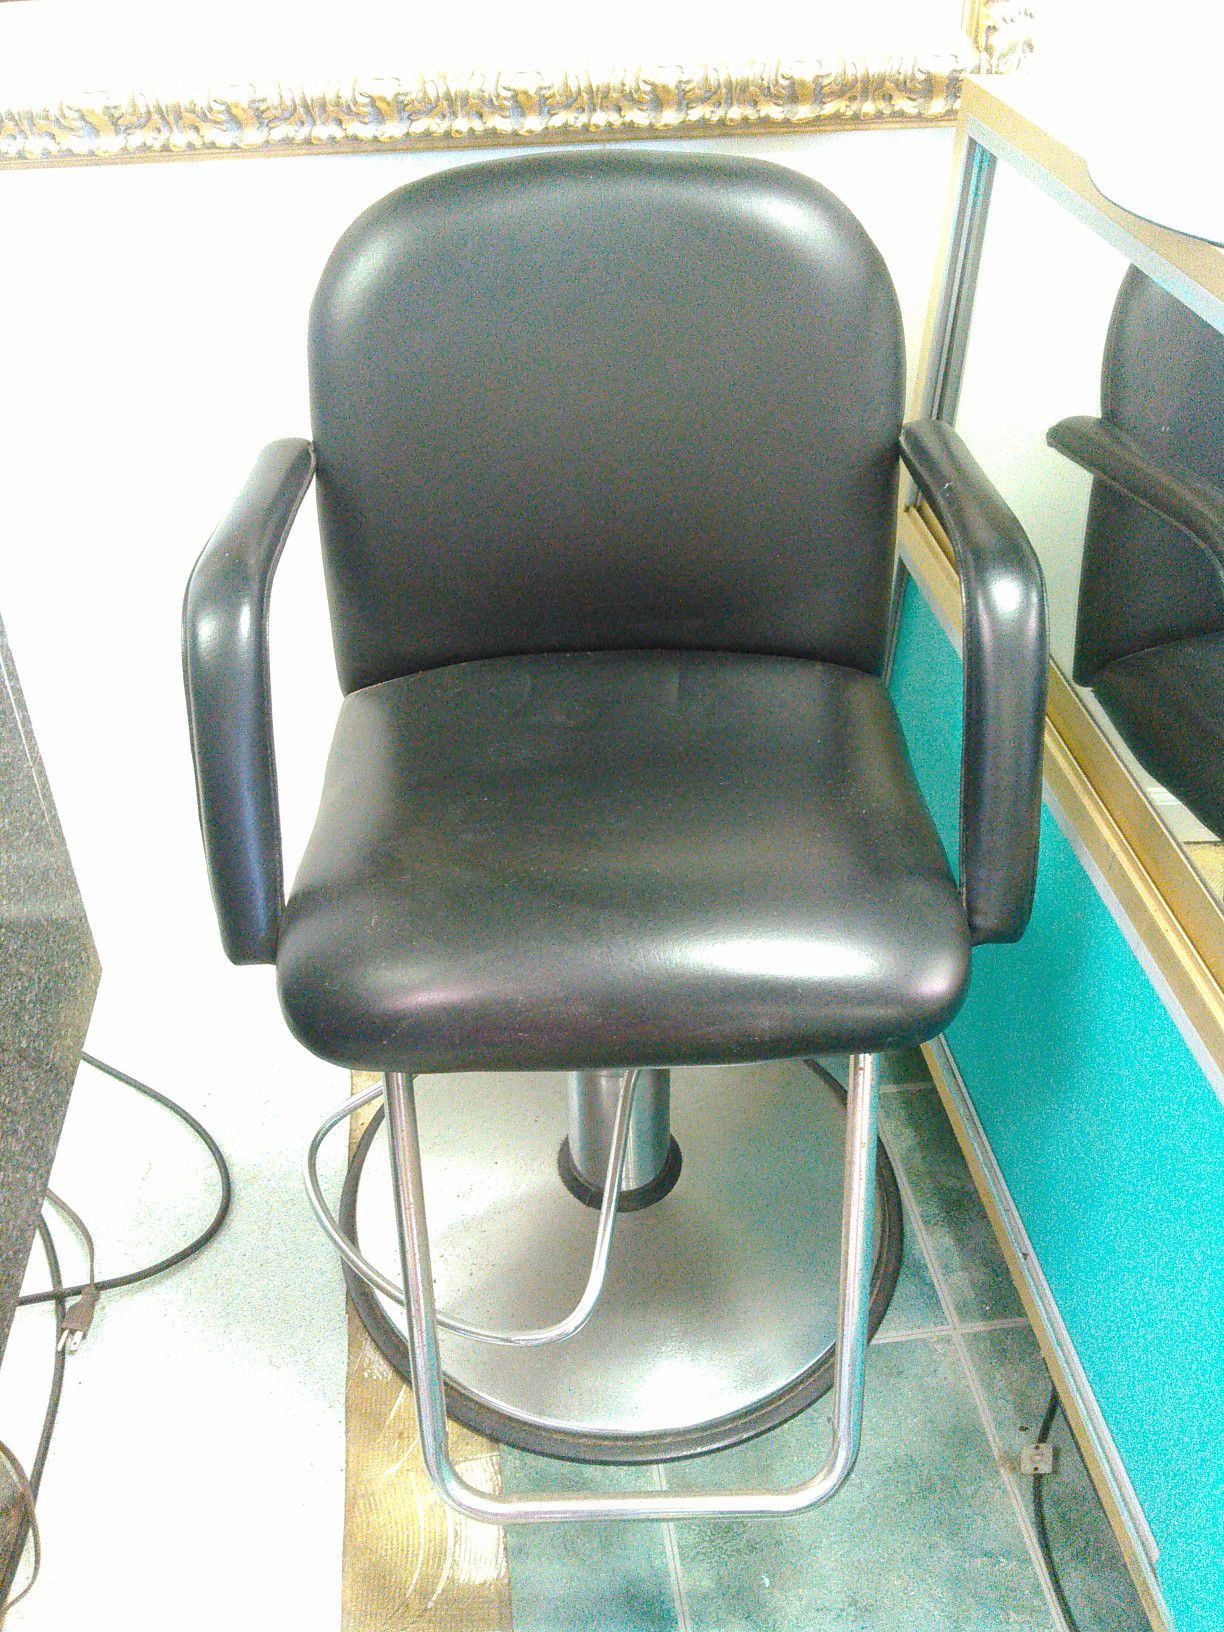 Salon styling make up chair.